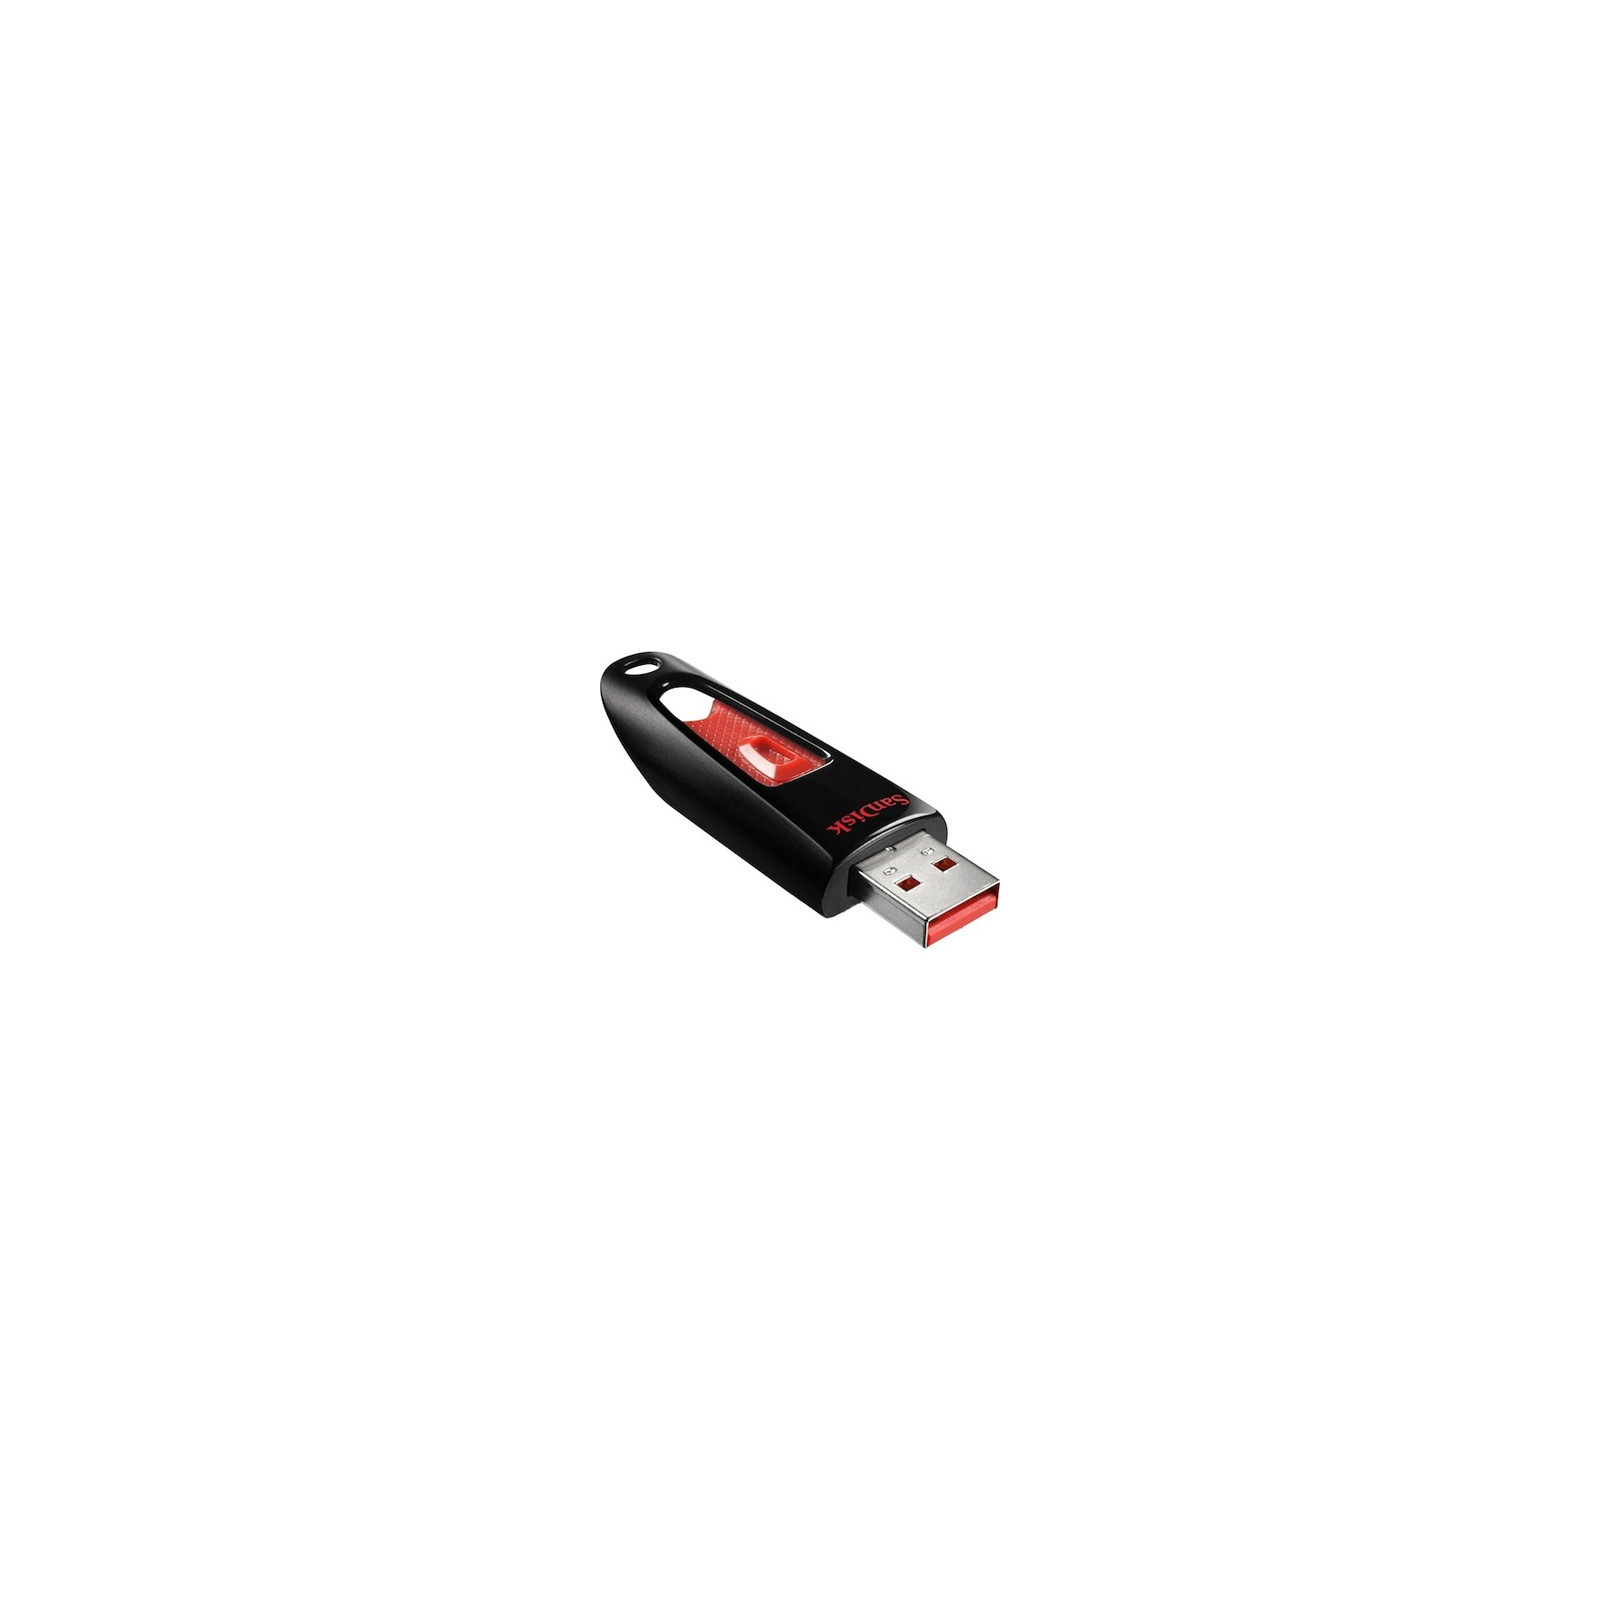 USB флеш накопитель SanDisk 8Gb Cruzer Ultra (SDCZ45-008G-U46) изображение 2